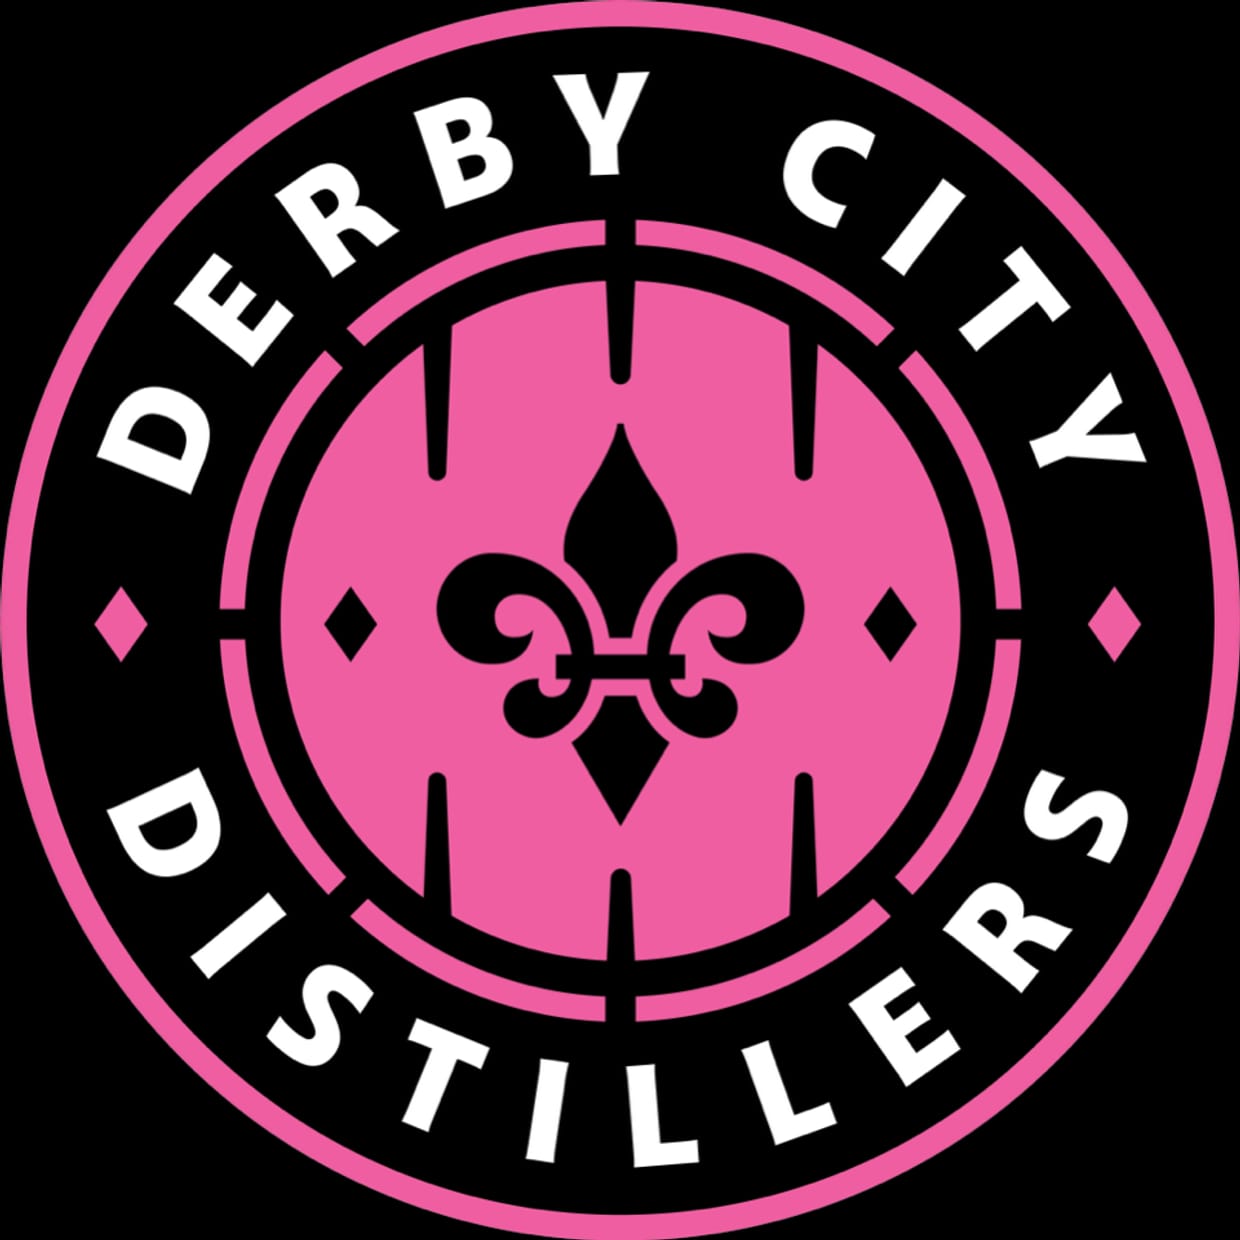 Derby City Distillers v. Lebanon Leprechauns